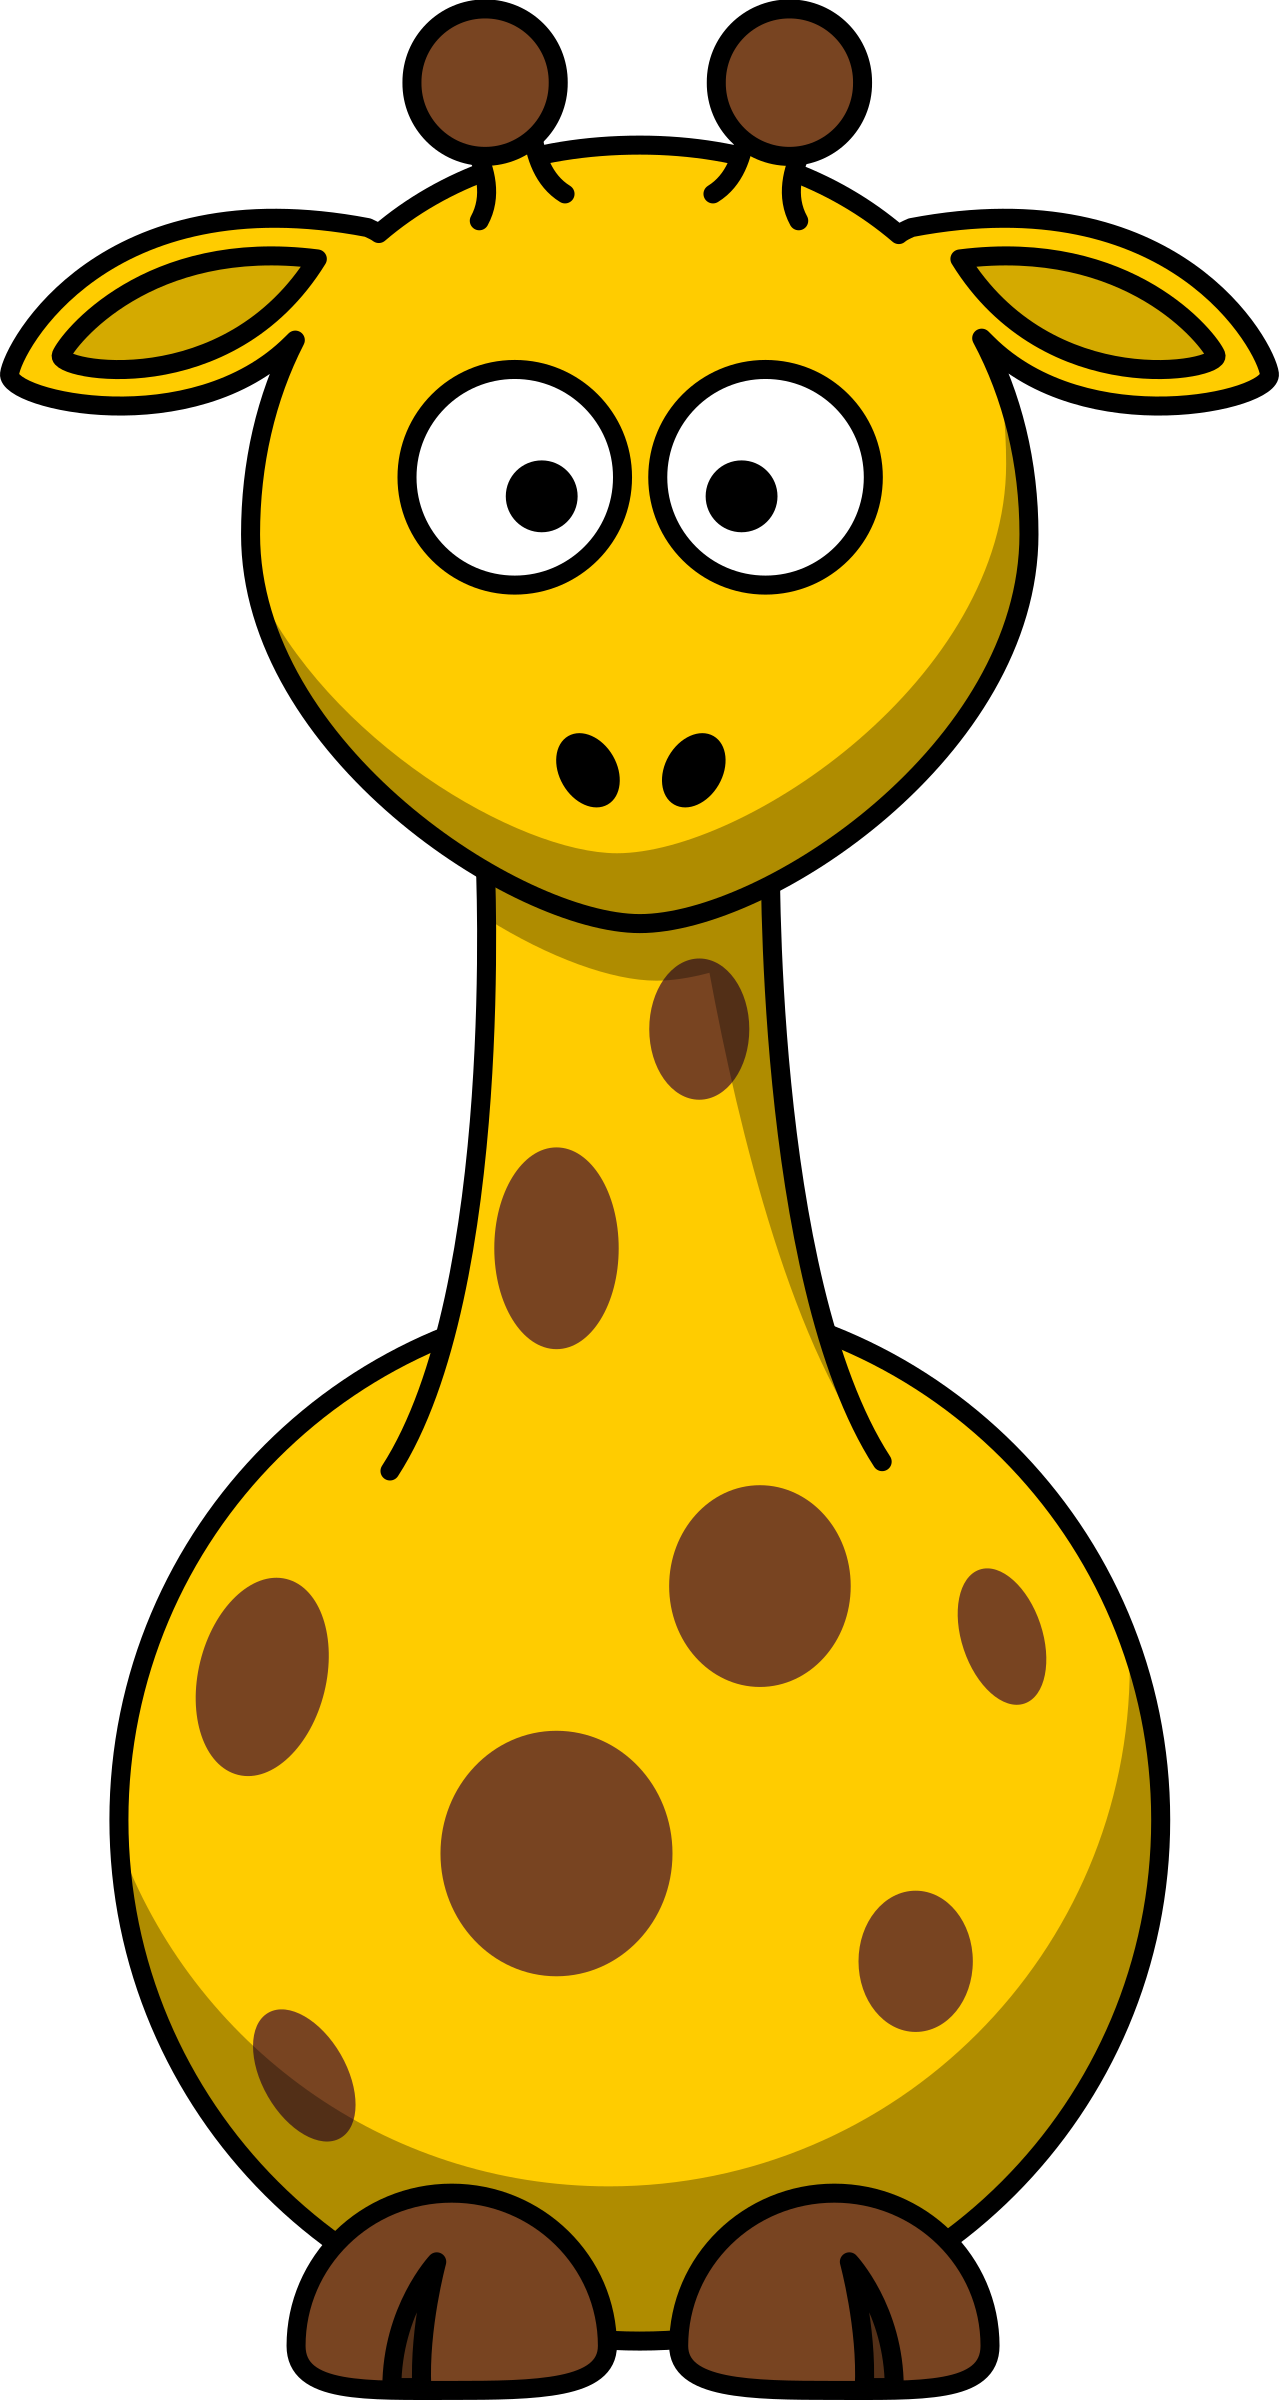 Clipart - Cartoon giraffe